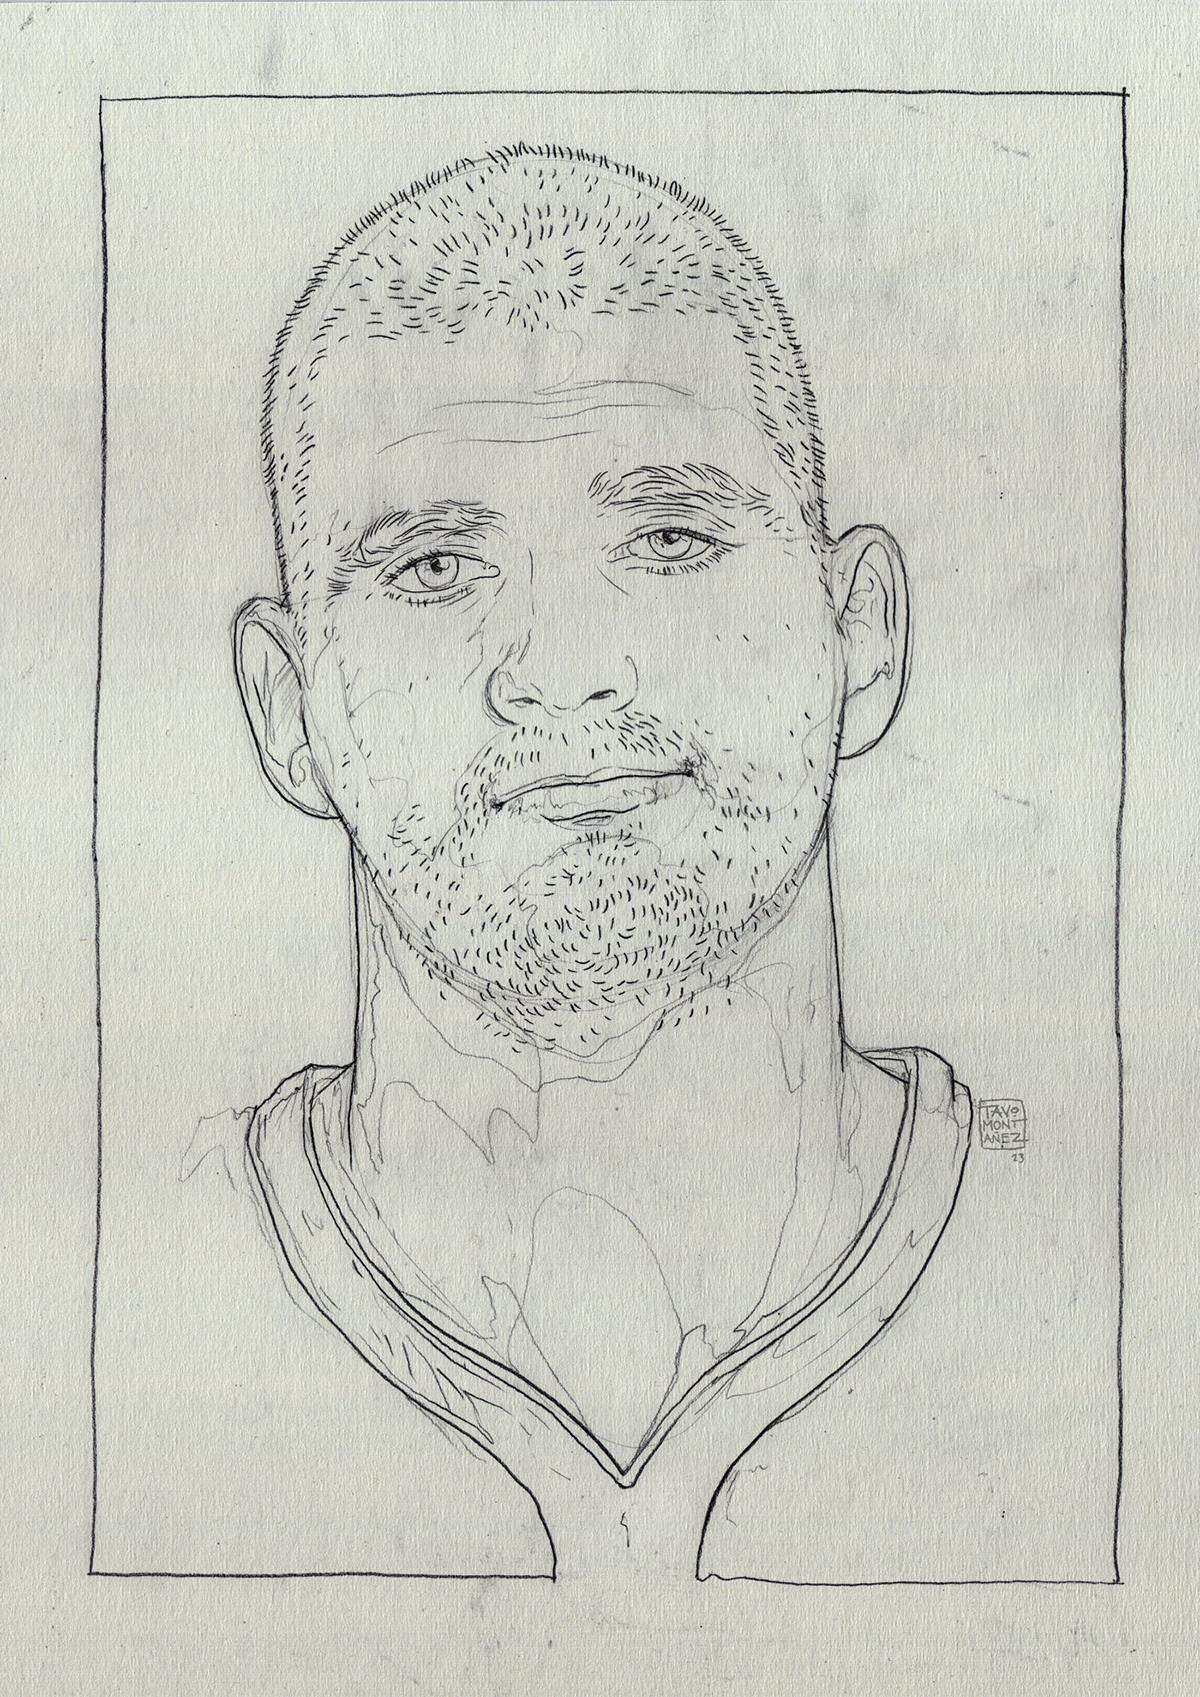 nikola jokic Denver Nuggets portrait portrait illustration basketball sports illustration nba mvp NBA